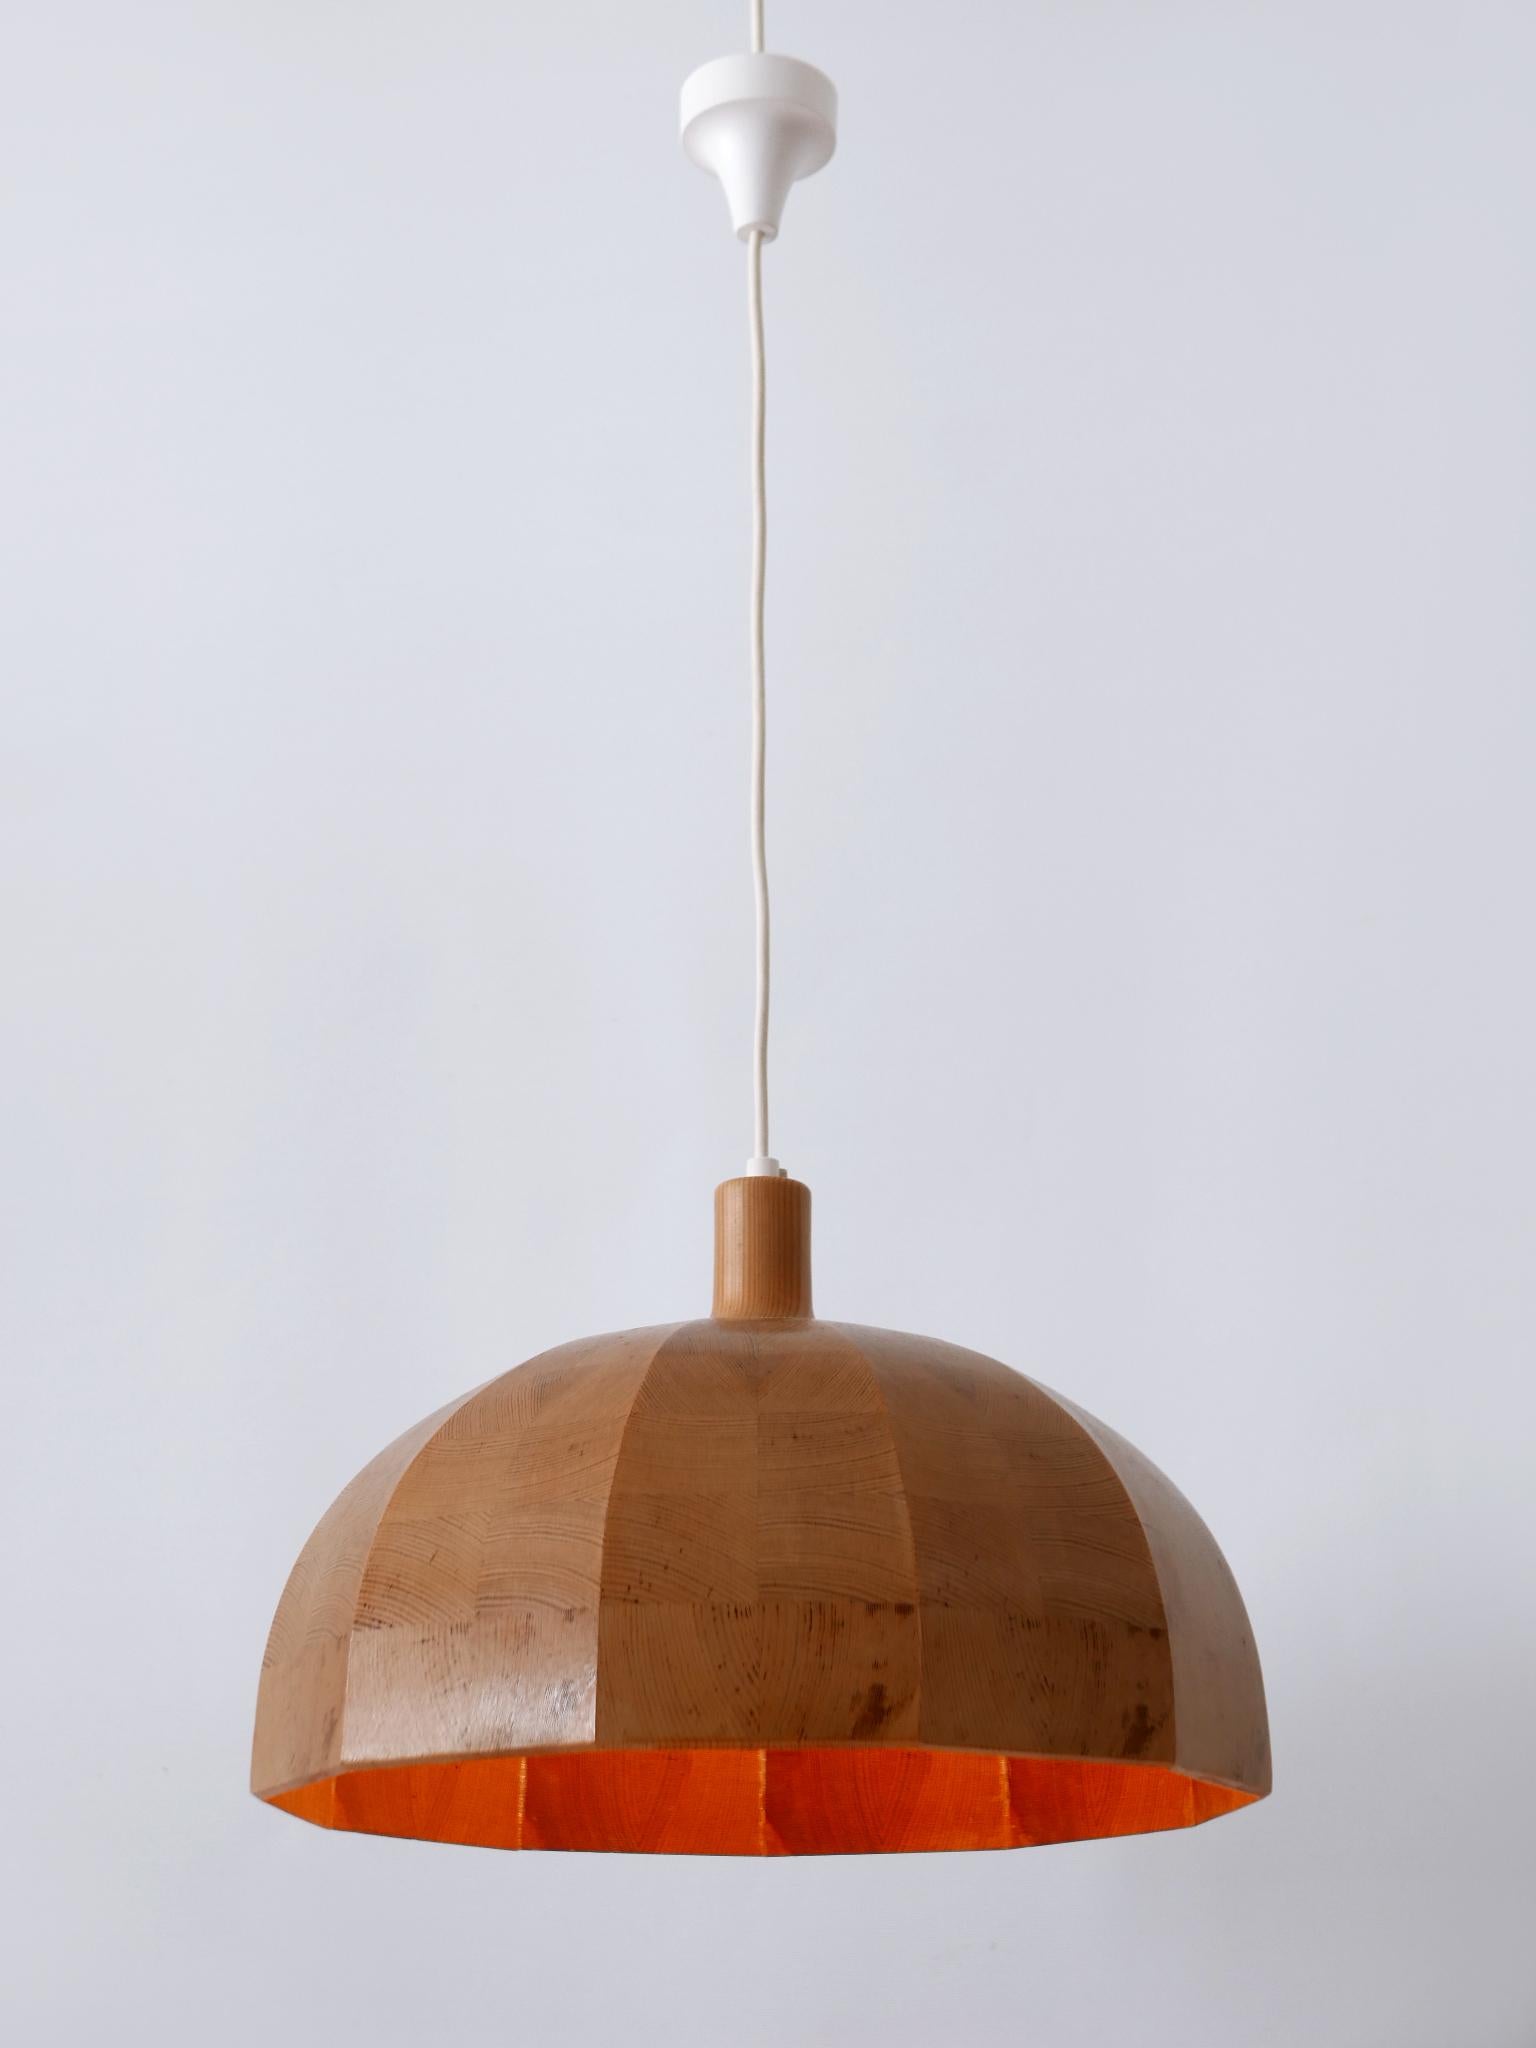 Rare Mid-Century Modern Pine Wood Pendant Lamp or Hanging Light Sweden, 1960s For Sale 2